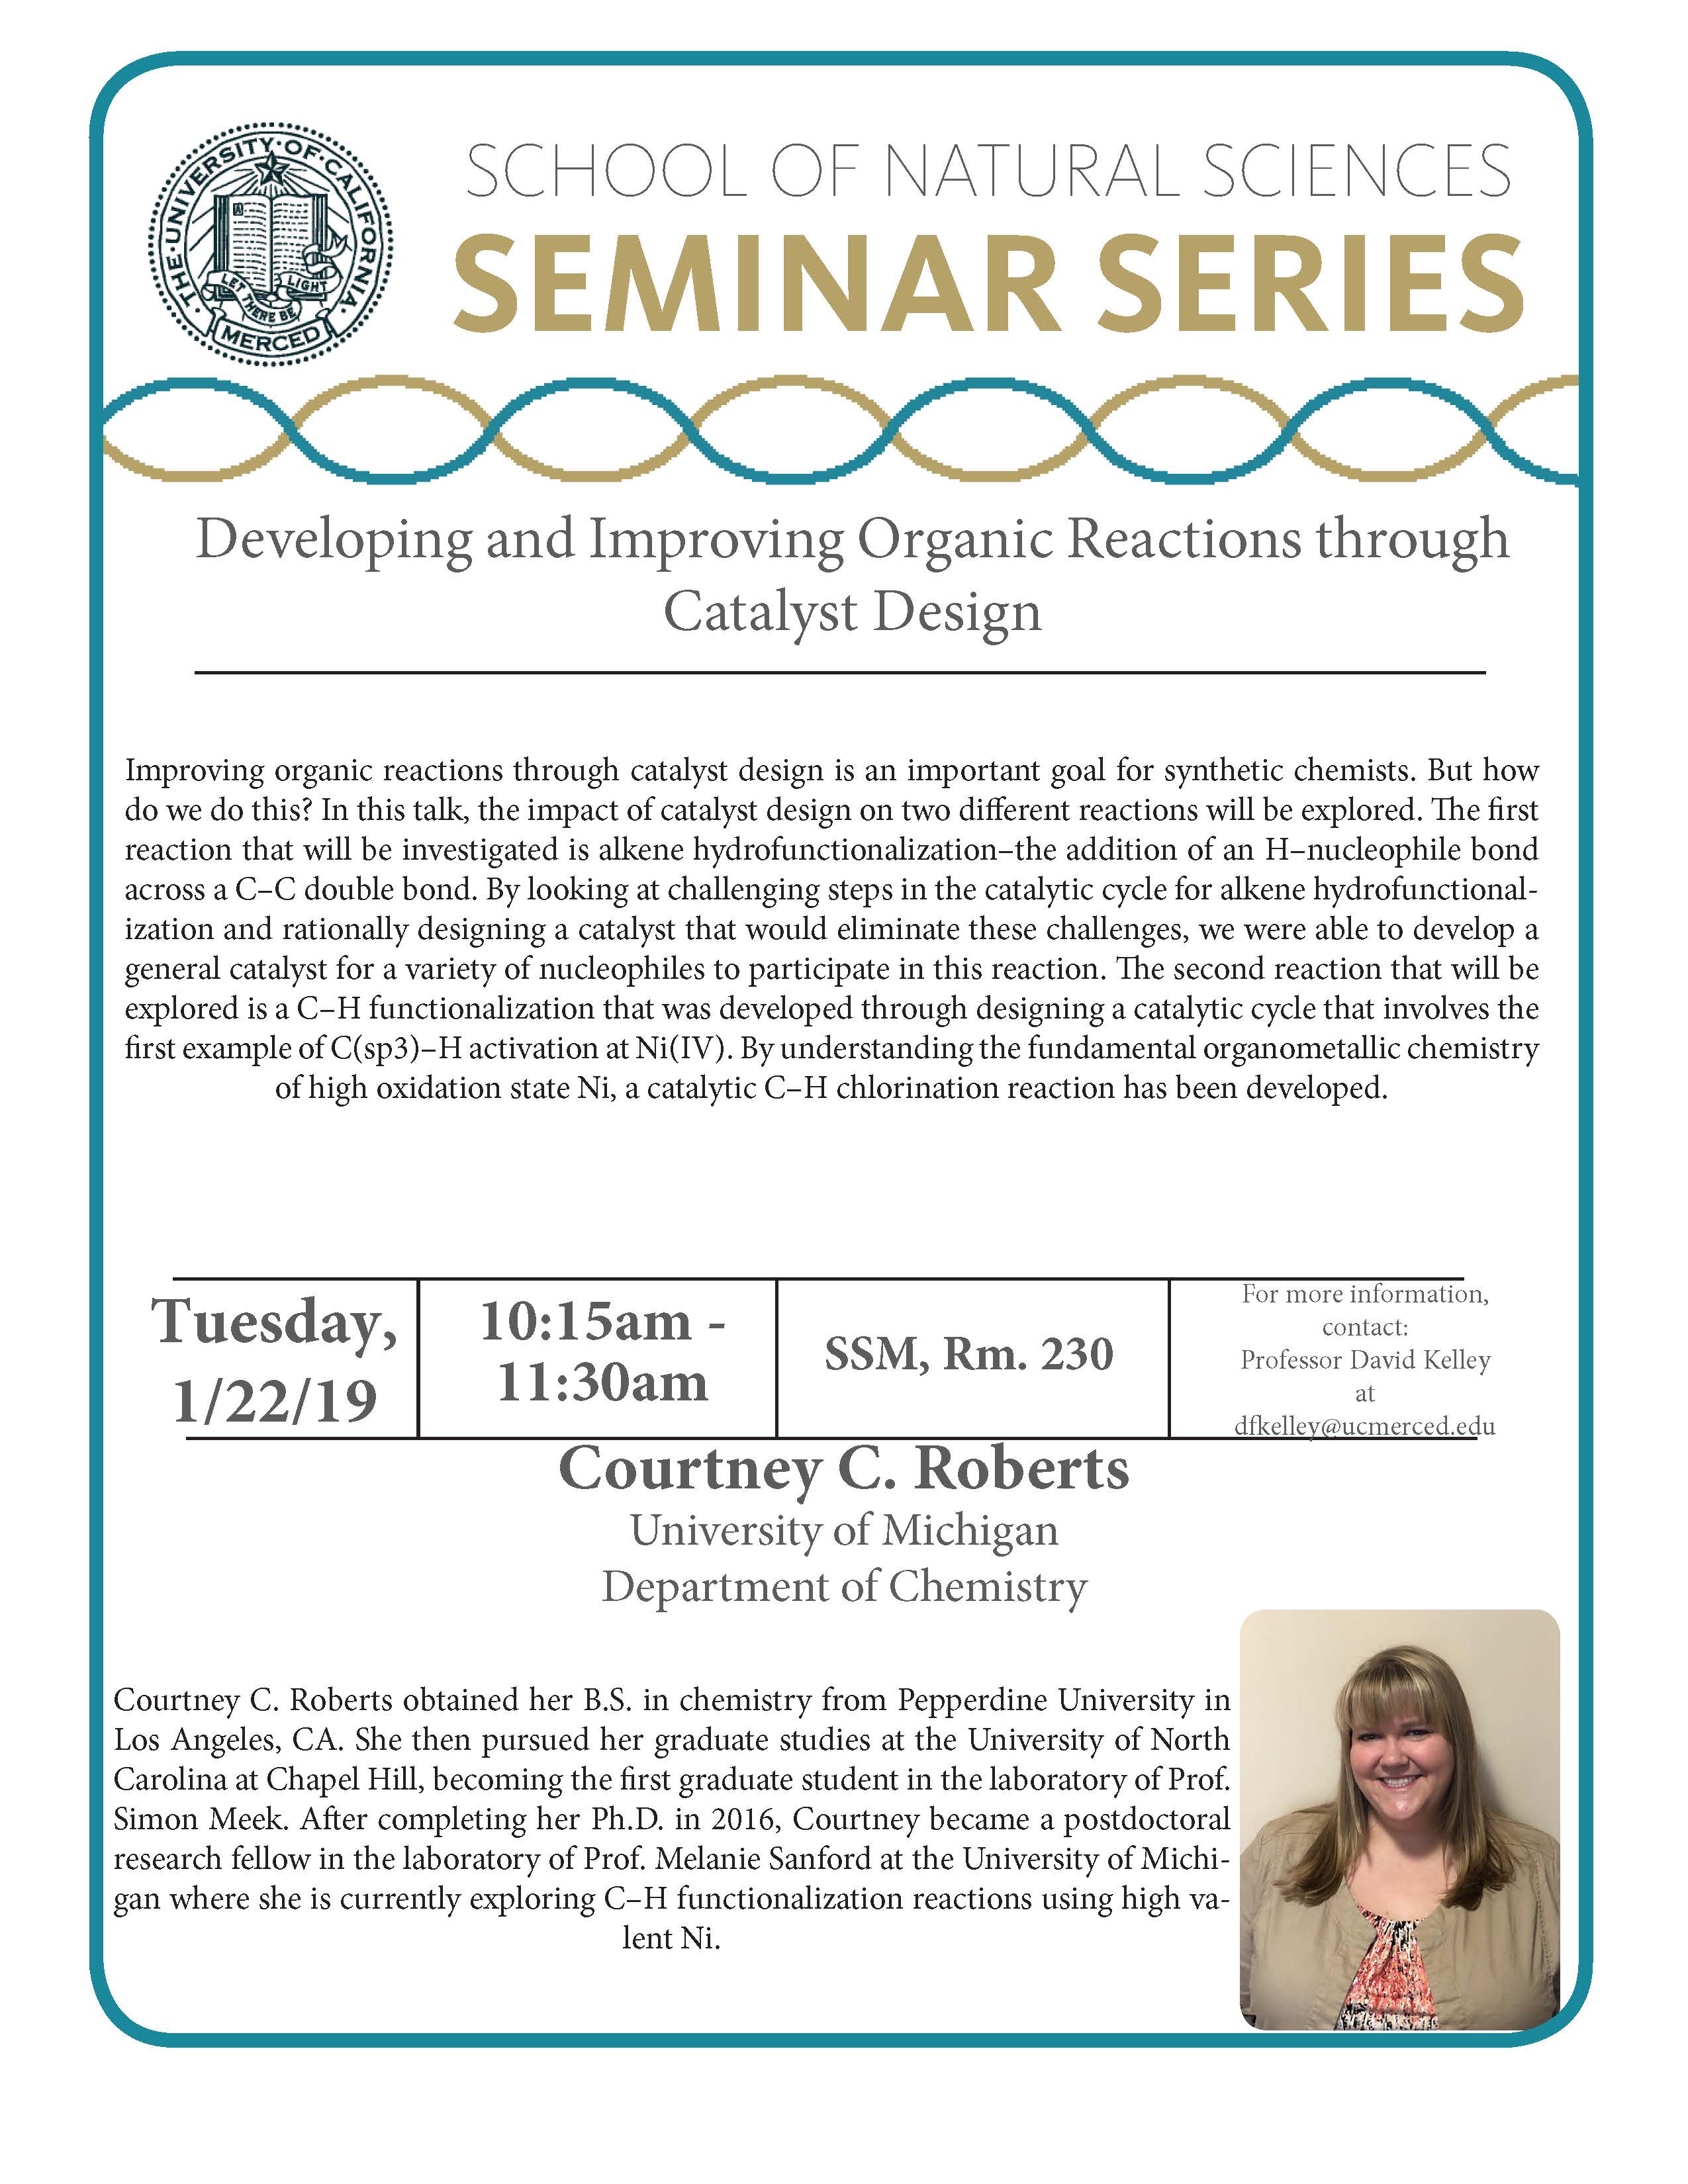 CCB Seminar - Dr. Courtney Roberts